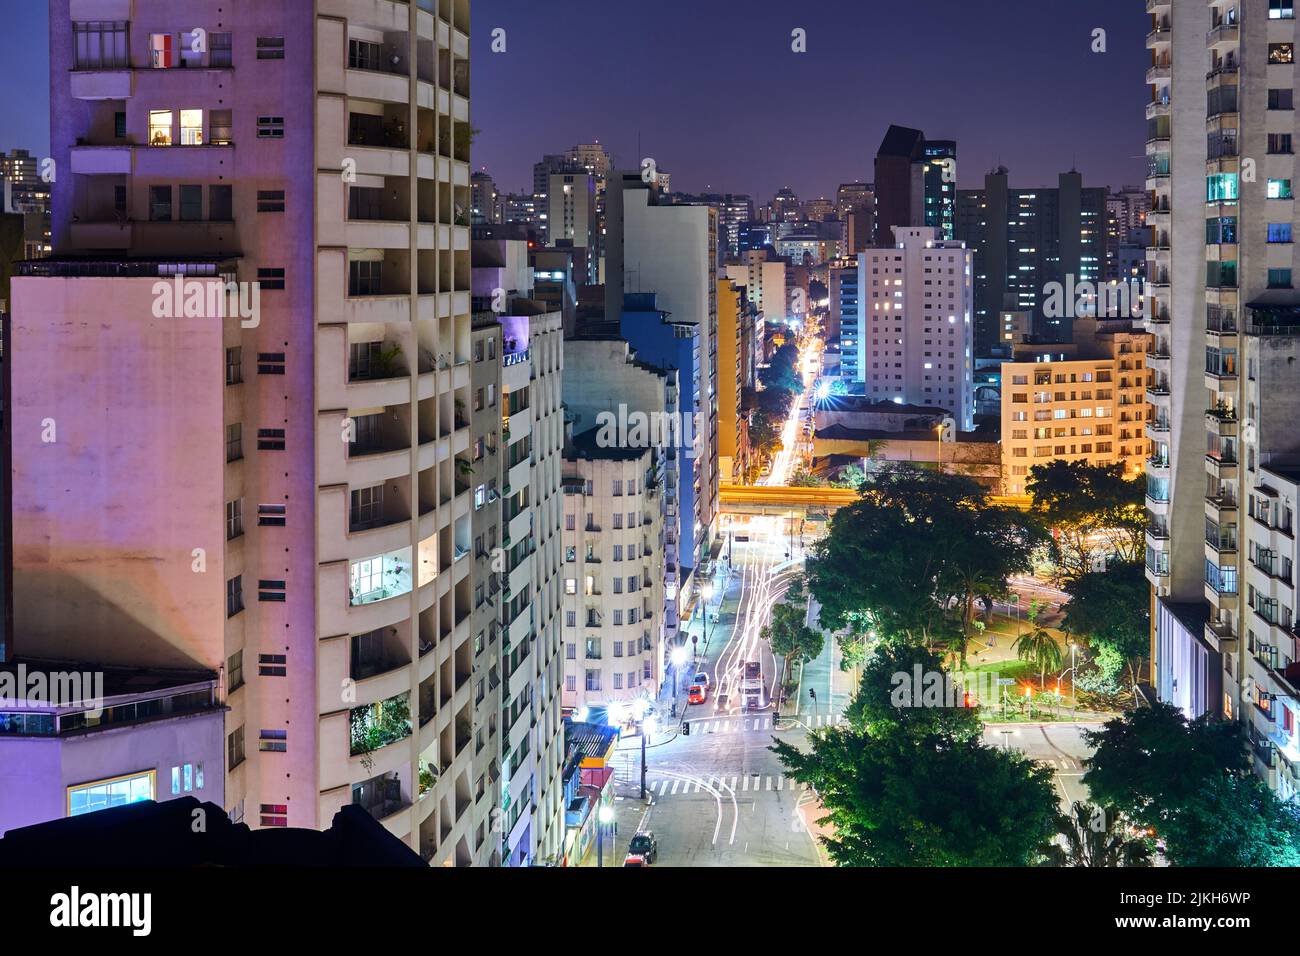 City center of Sao Paulo by night Stock Photo